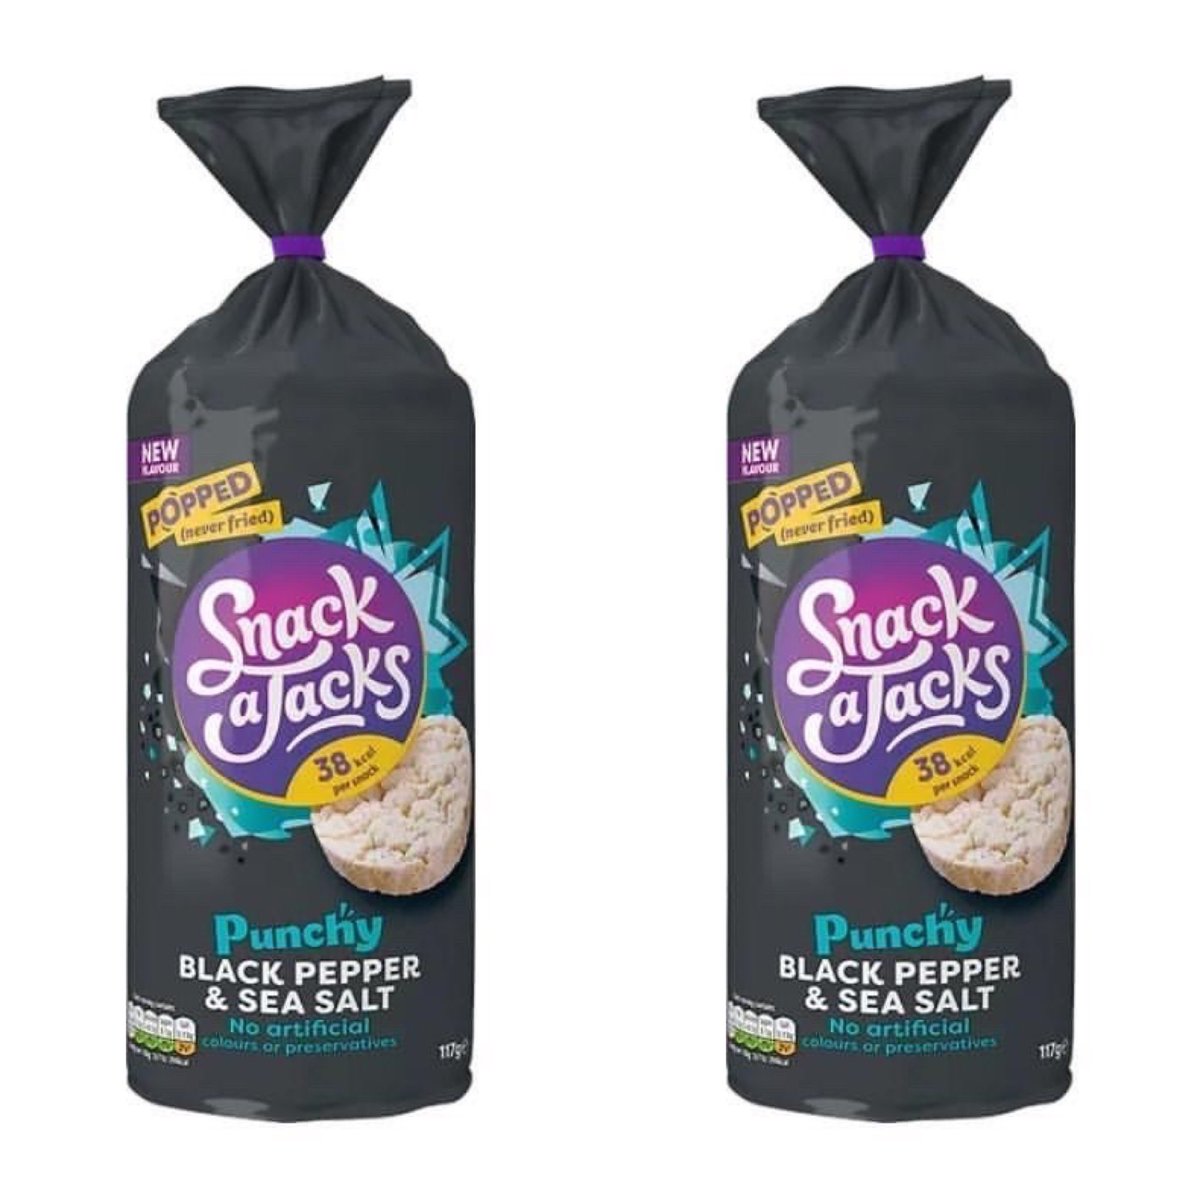 Snack A Jacks Black Pepper & Sea Salt is coming to UK shops soon 🧂 #snackajacks #lowfat #ricecakes #uk #foodnews #lowcalorie #glutenfree